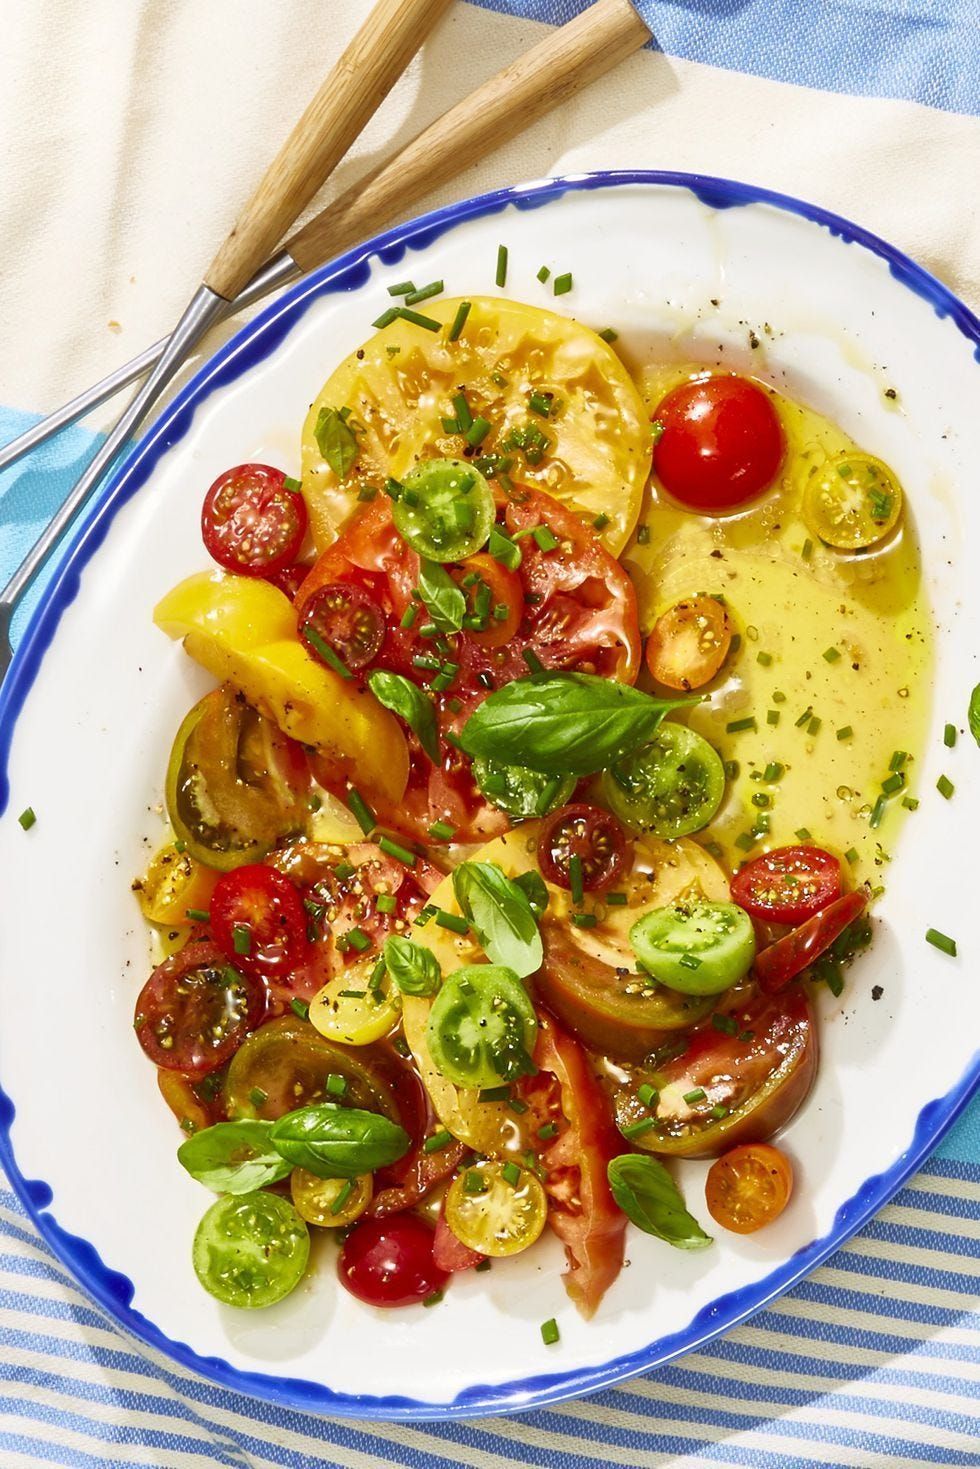 Best Heirloom Tomato Salad Recipe - How to Make Heirloom Tomato Salad